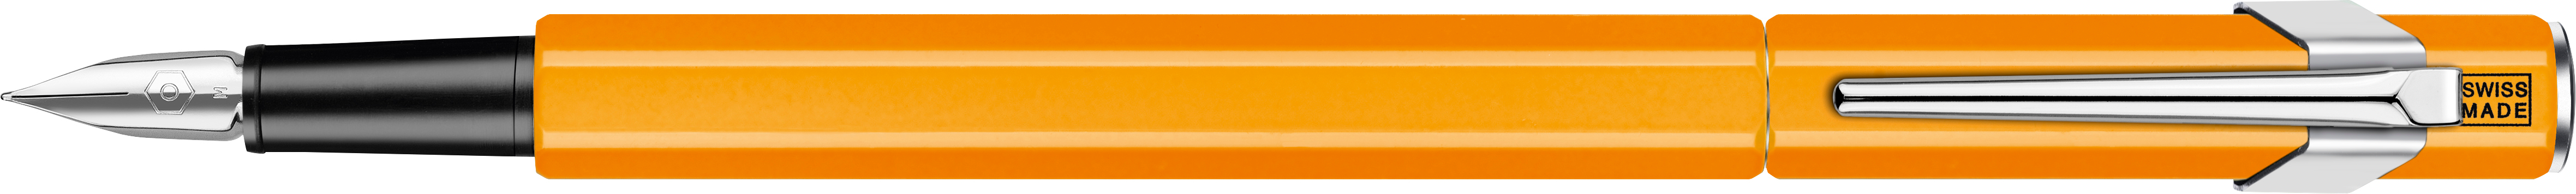 CARAN D'ACHE Stylo plume 849 M 840.030 orange fluo, verni orange fluo, verni